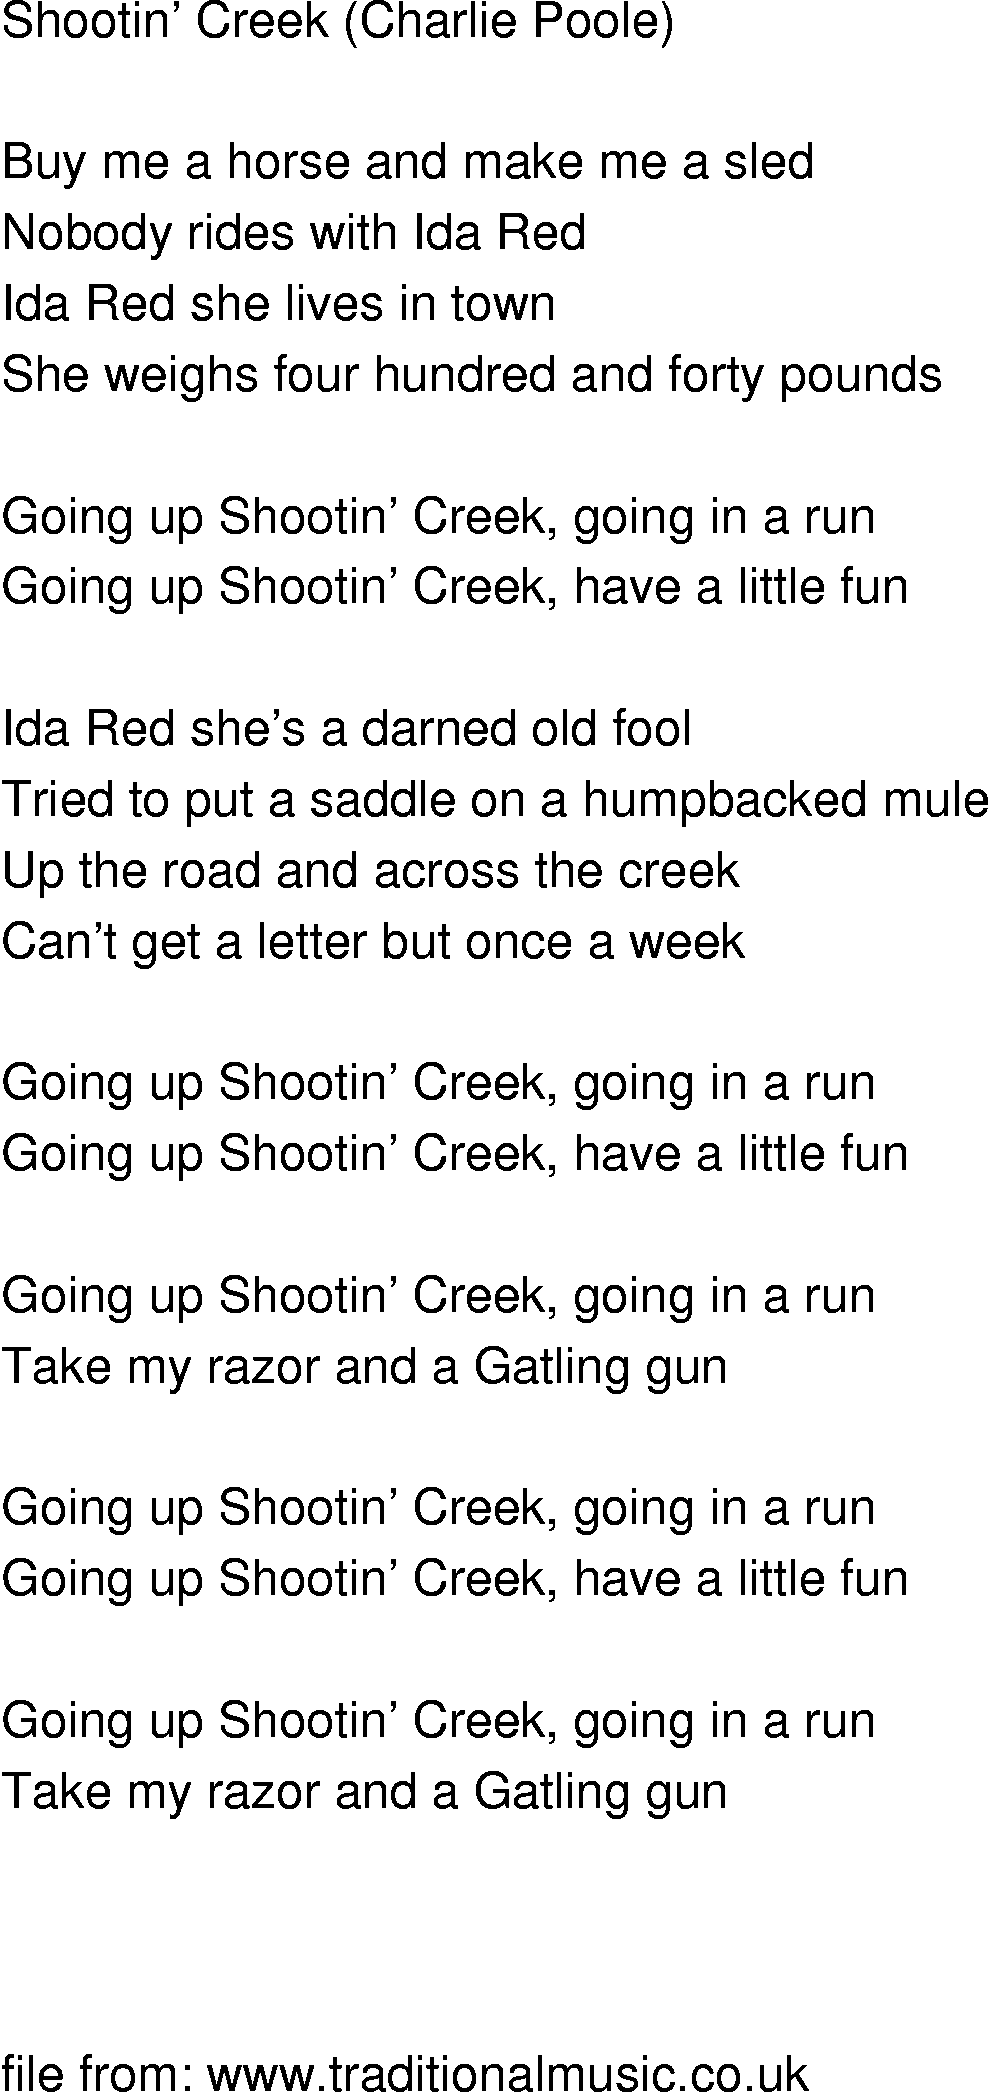 Old-Time (oldtimey) Song Lyrics - shootin creek